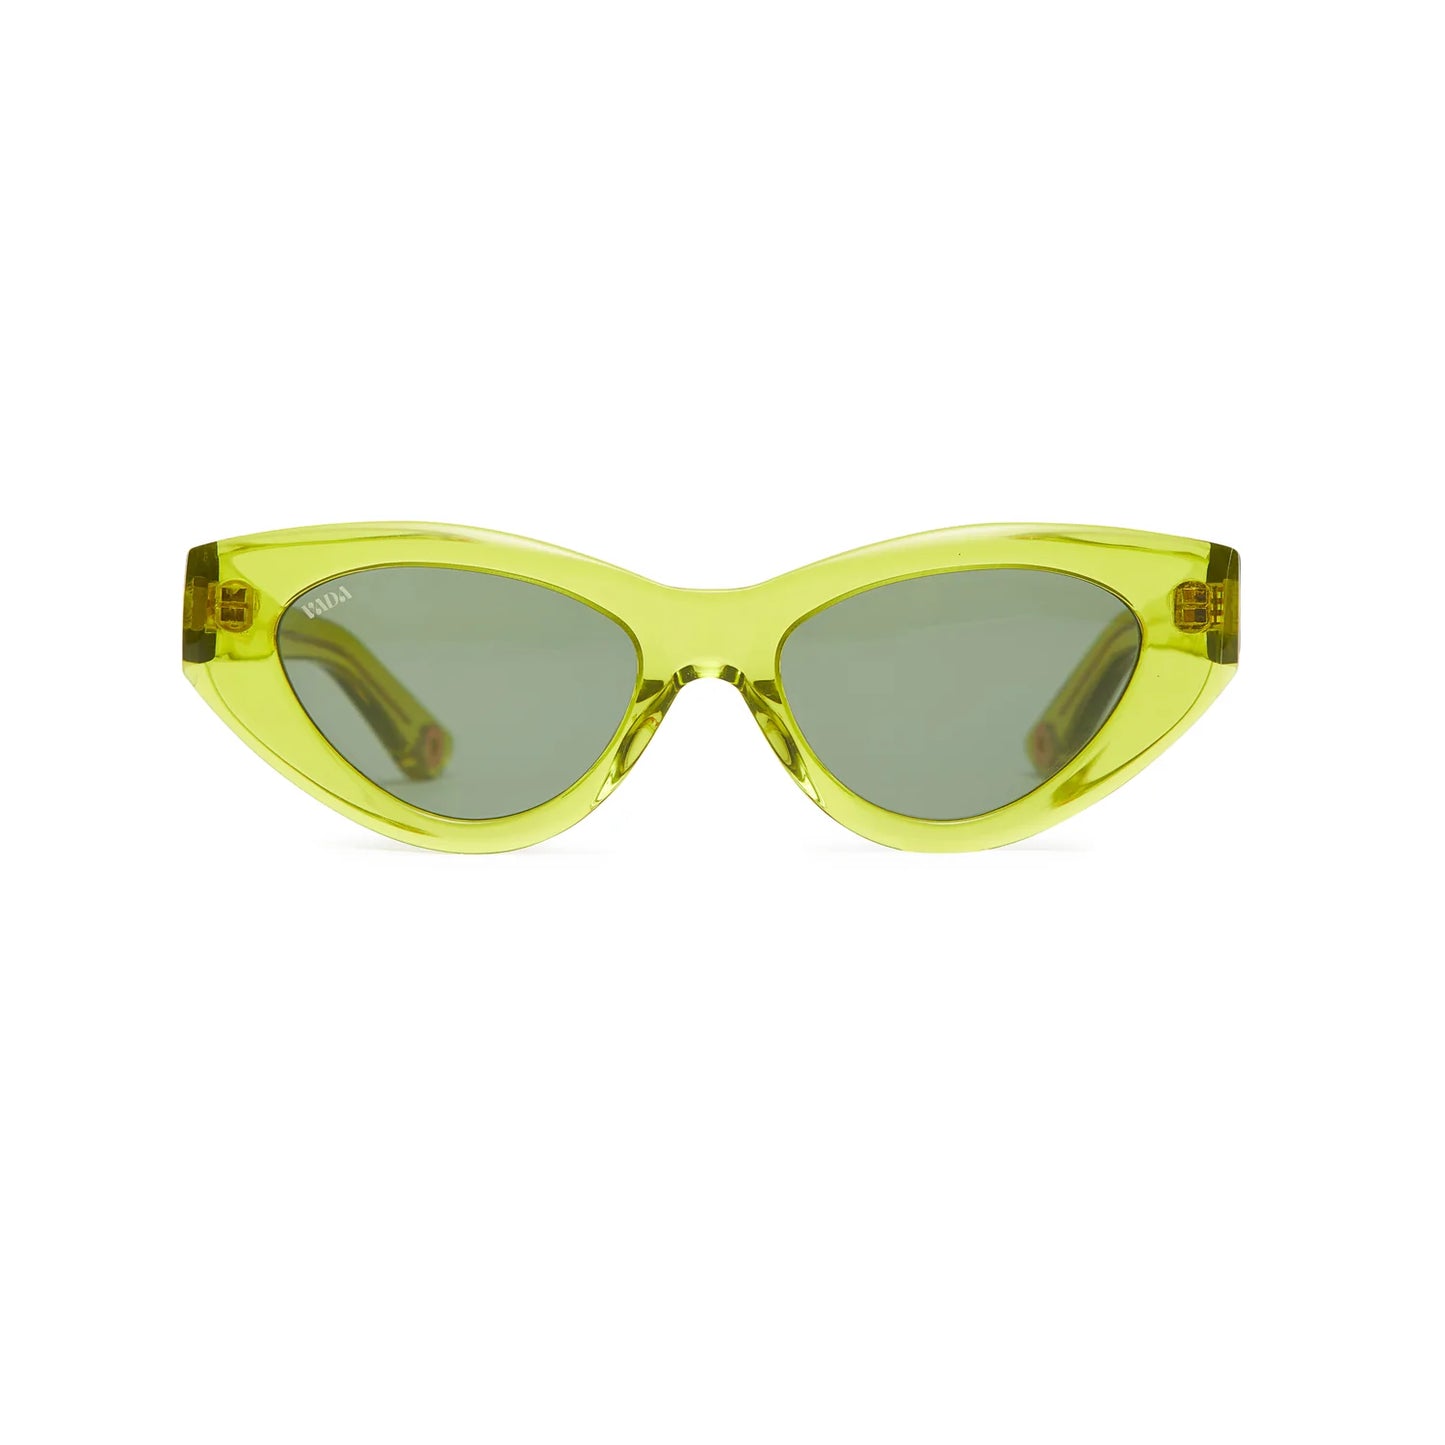 CATFISH Sunglasses by VADA